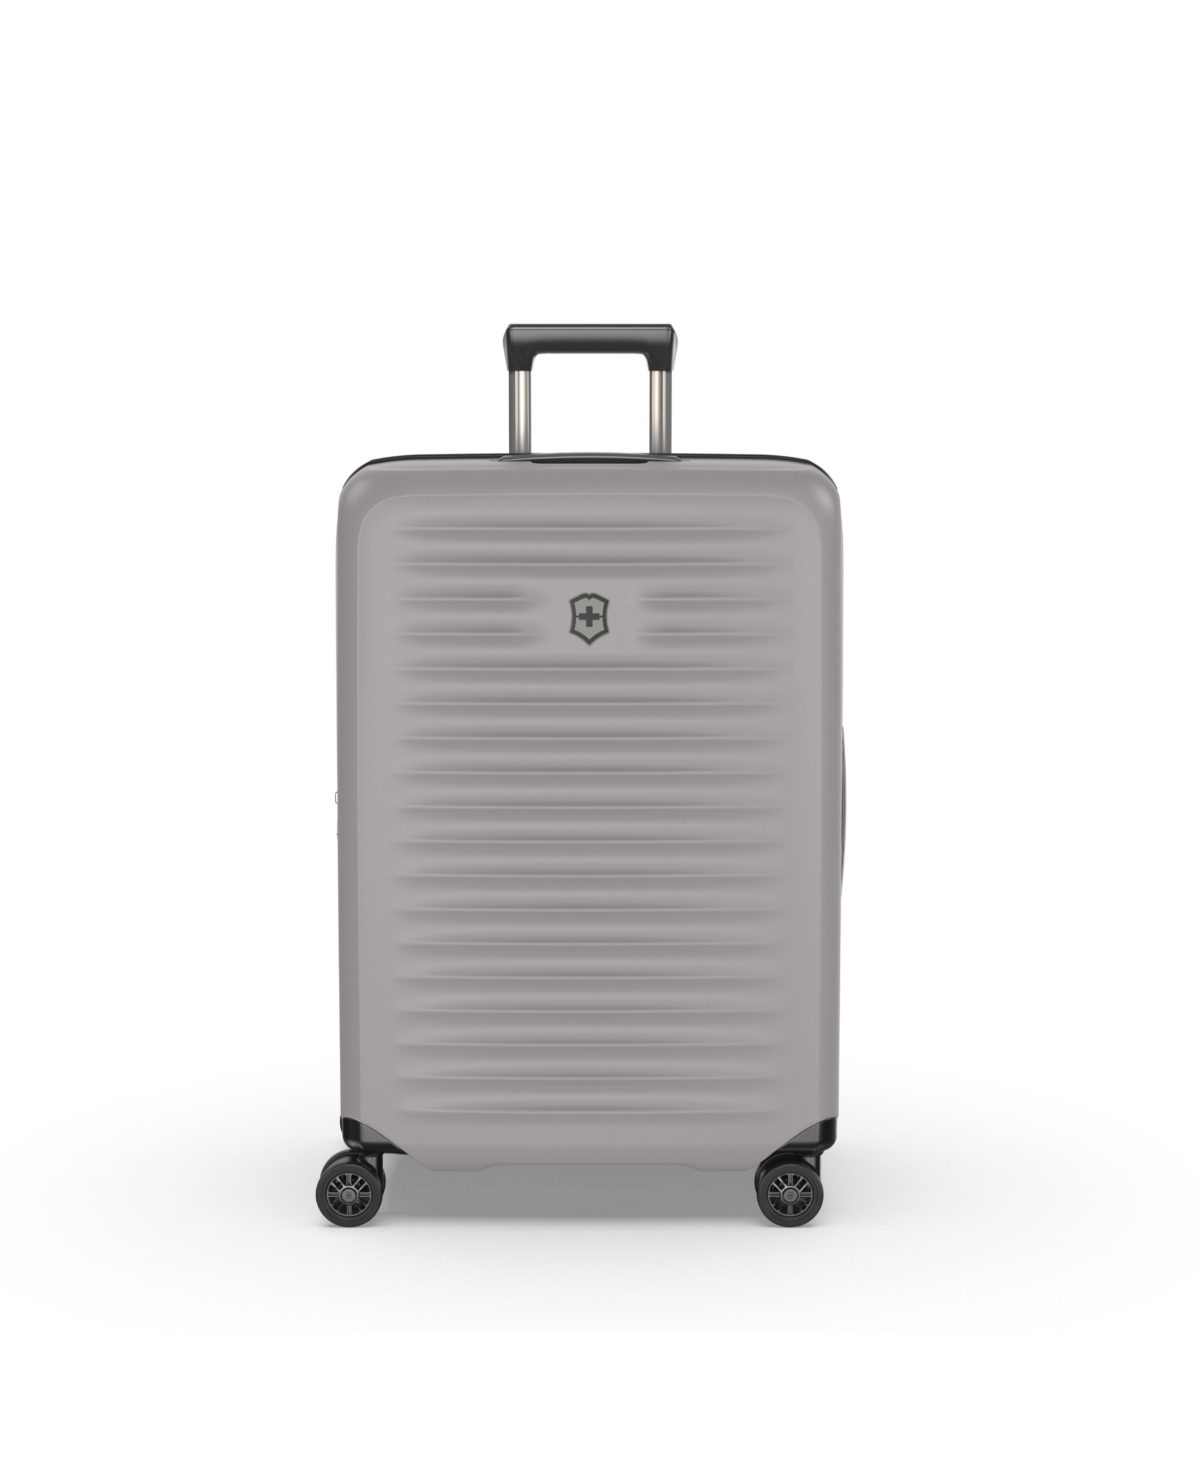 Airox Advanced Medium Luggage - Black